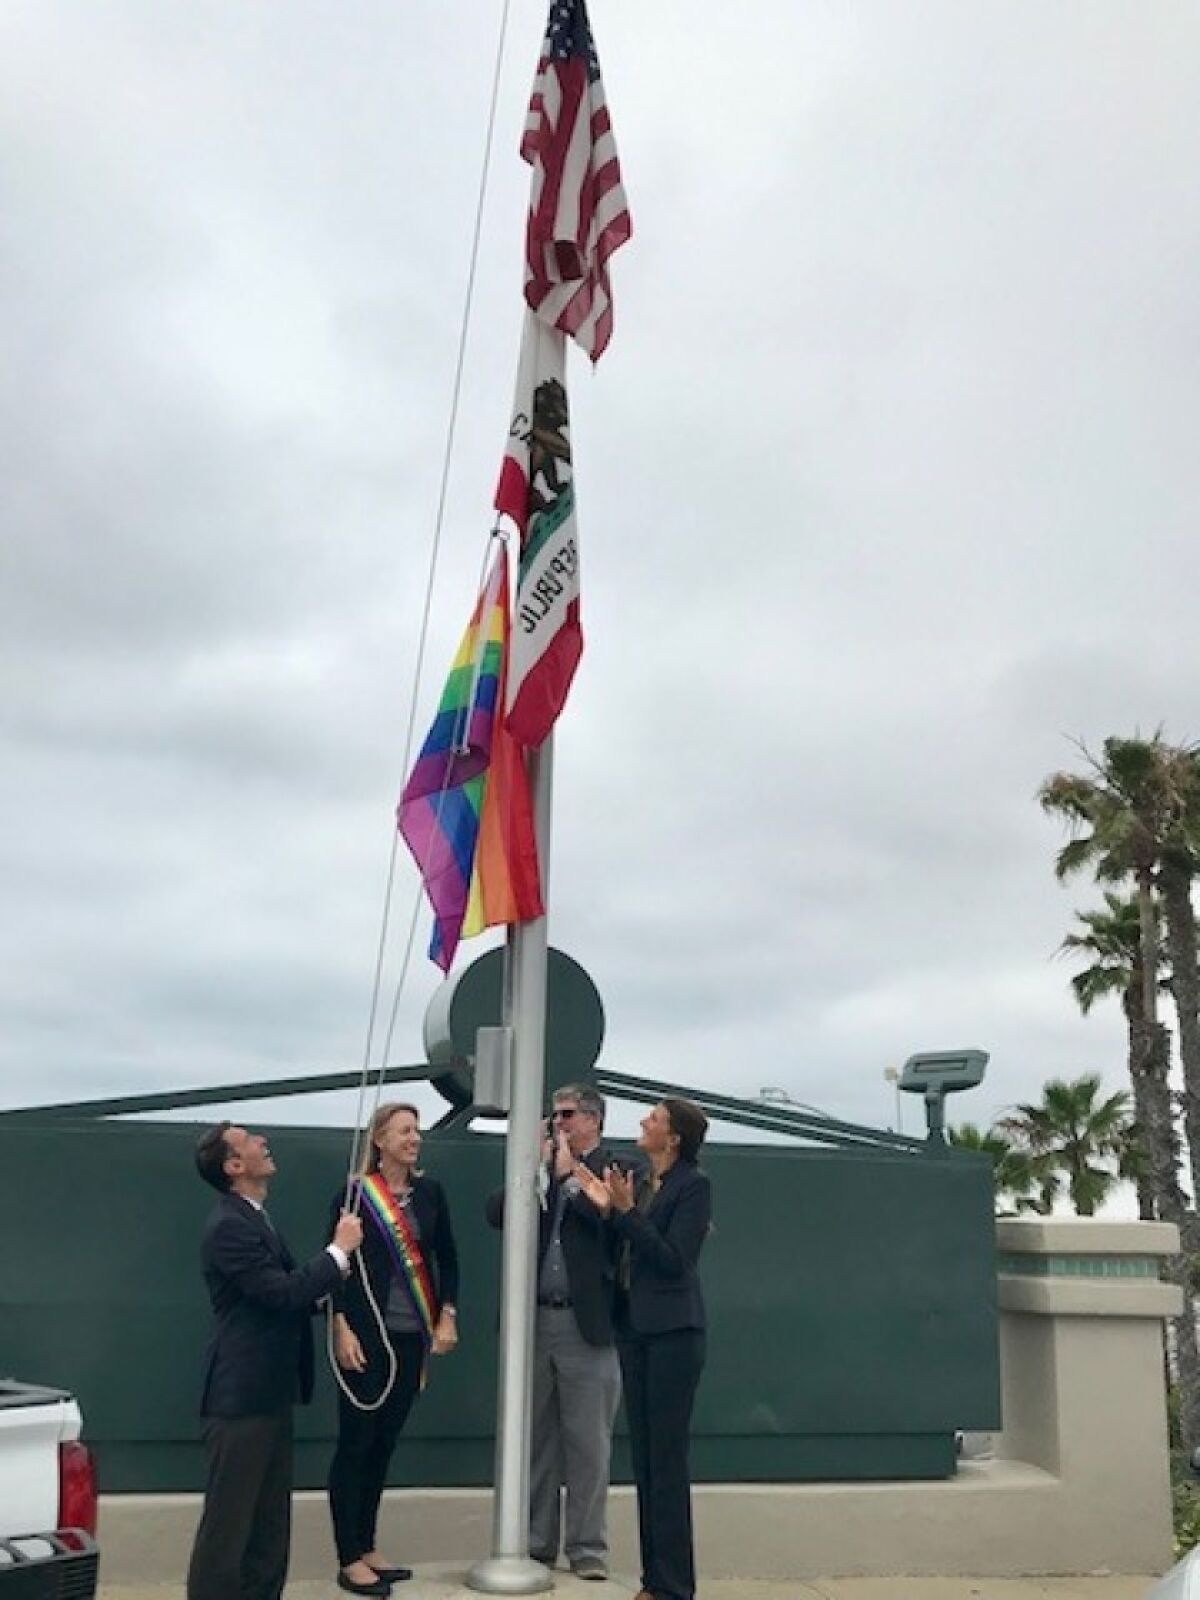 Encinitas Councilman Joe Mosca launches the pride flag skyward, as Mayor Catherine Blakespear, Councilman Tony Kranz and Councilwoman Kellie Shay Hinze celebrate Wednesday afternoon.